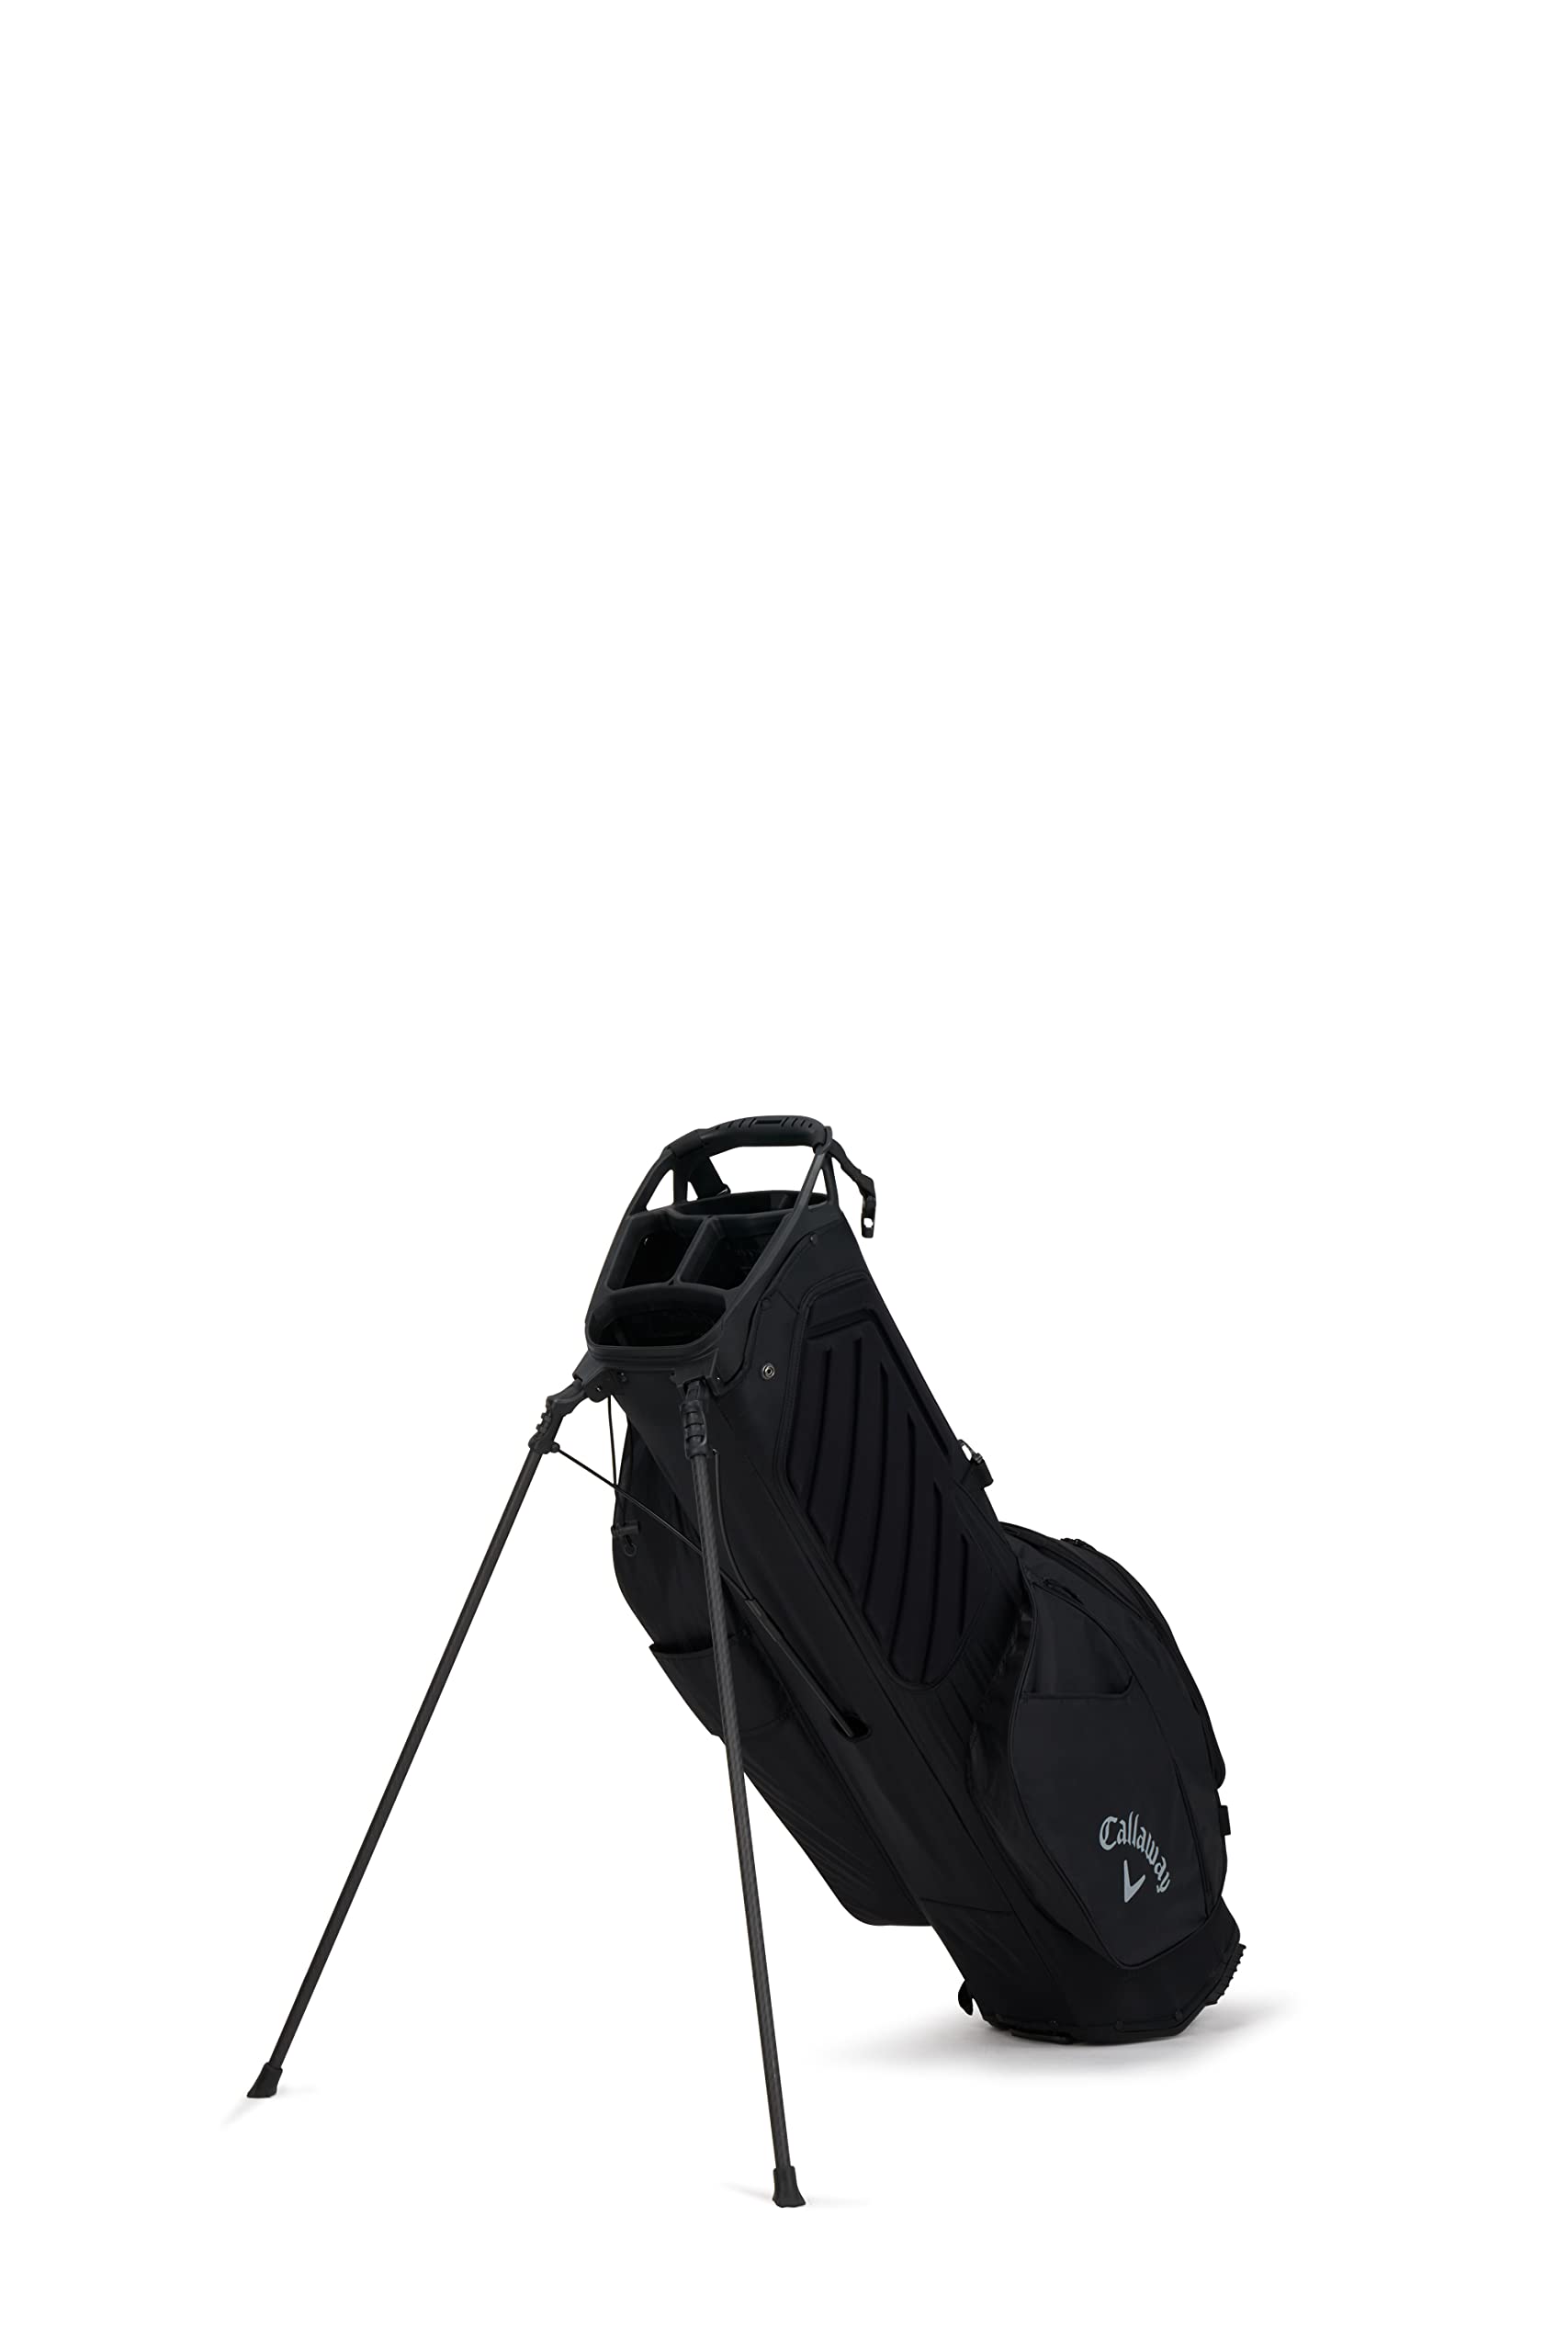 Callaway Golf Hyper Lite Zero Stand Bag (Navy/Red/White/Flag)